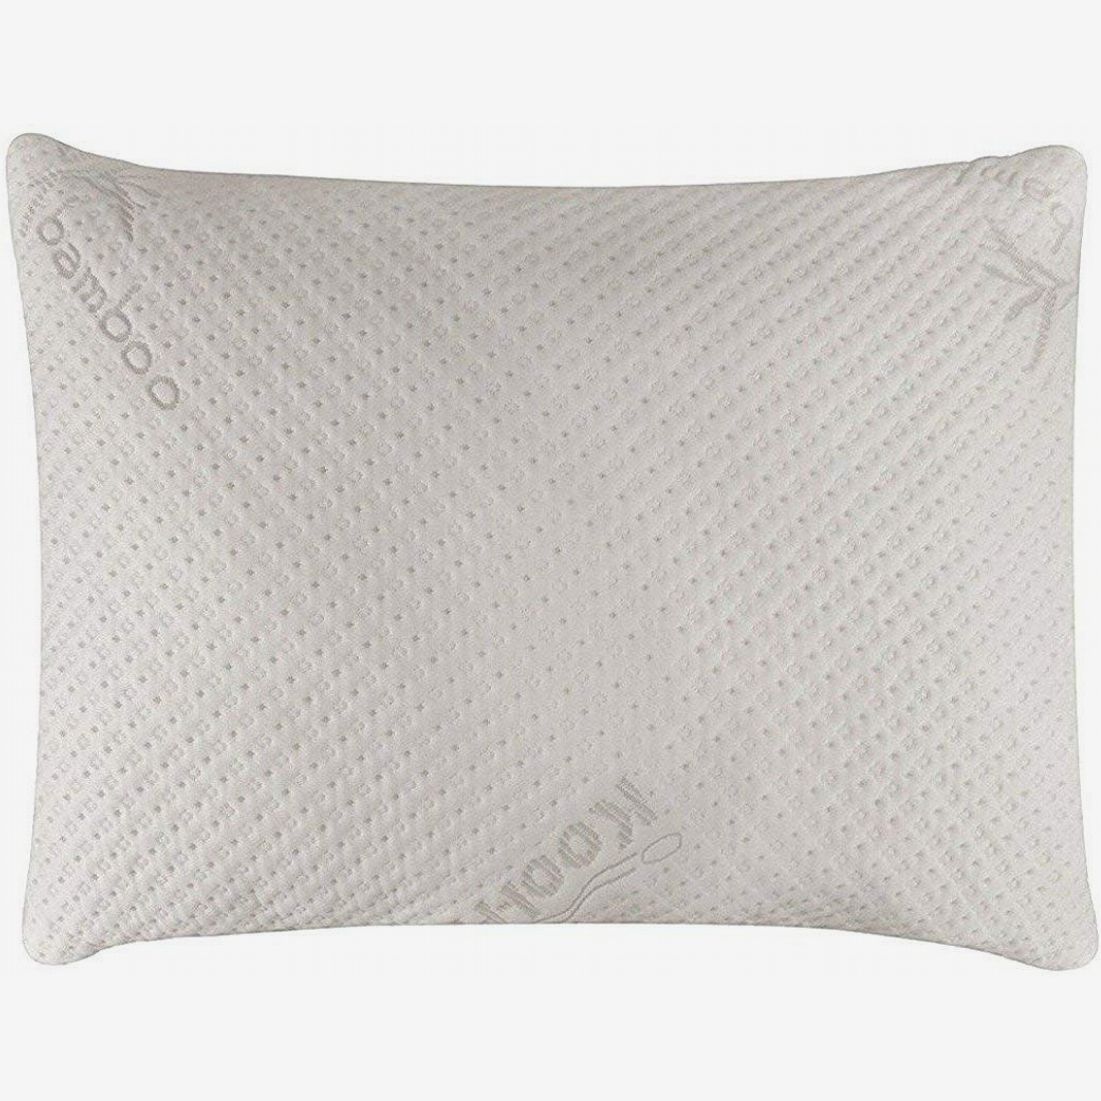 snuggle pedic pillow uk